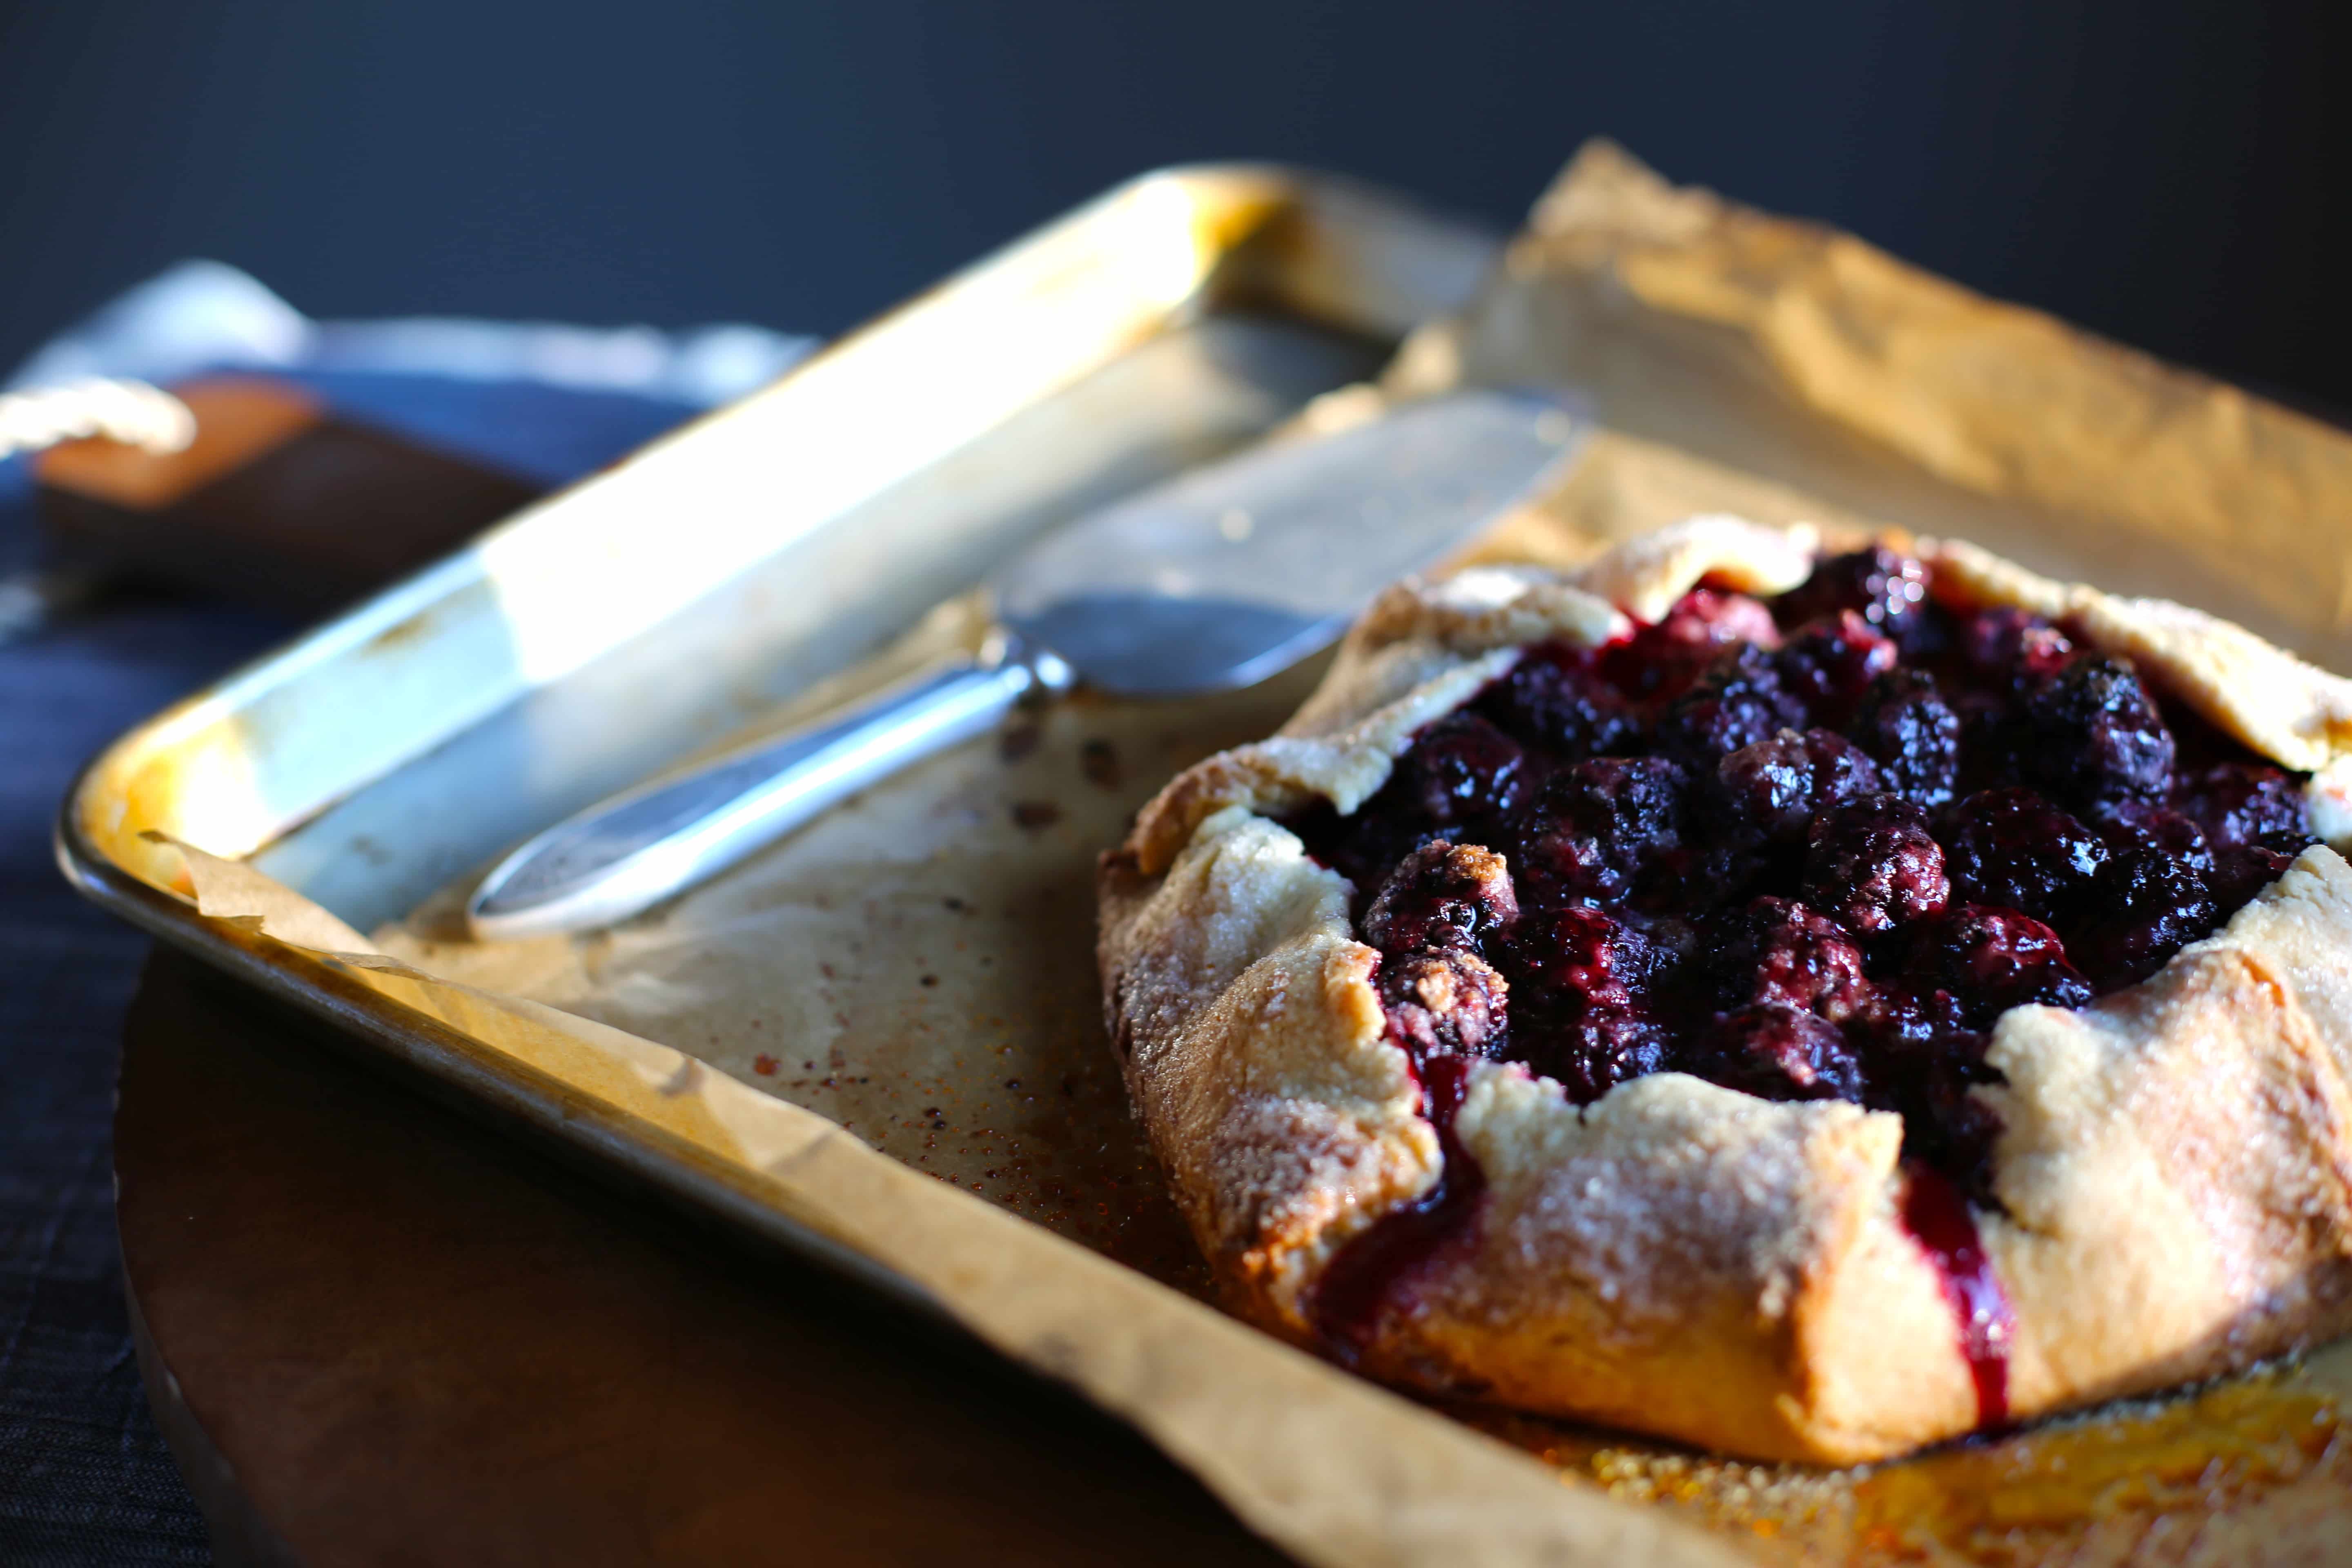  a blackberry galette/tart on a baking sheet with a serving utinsil 